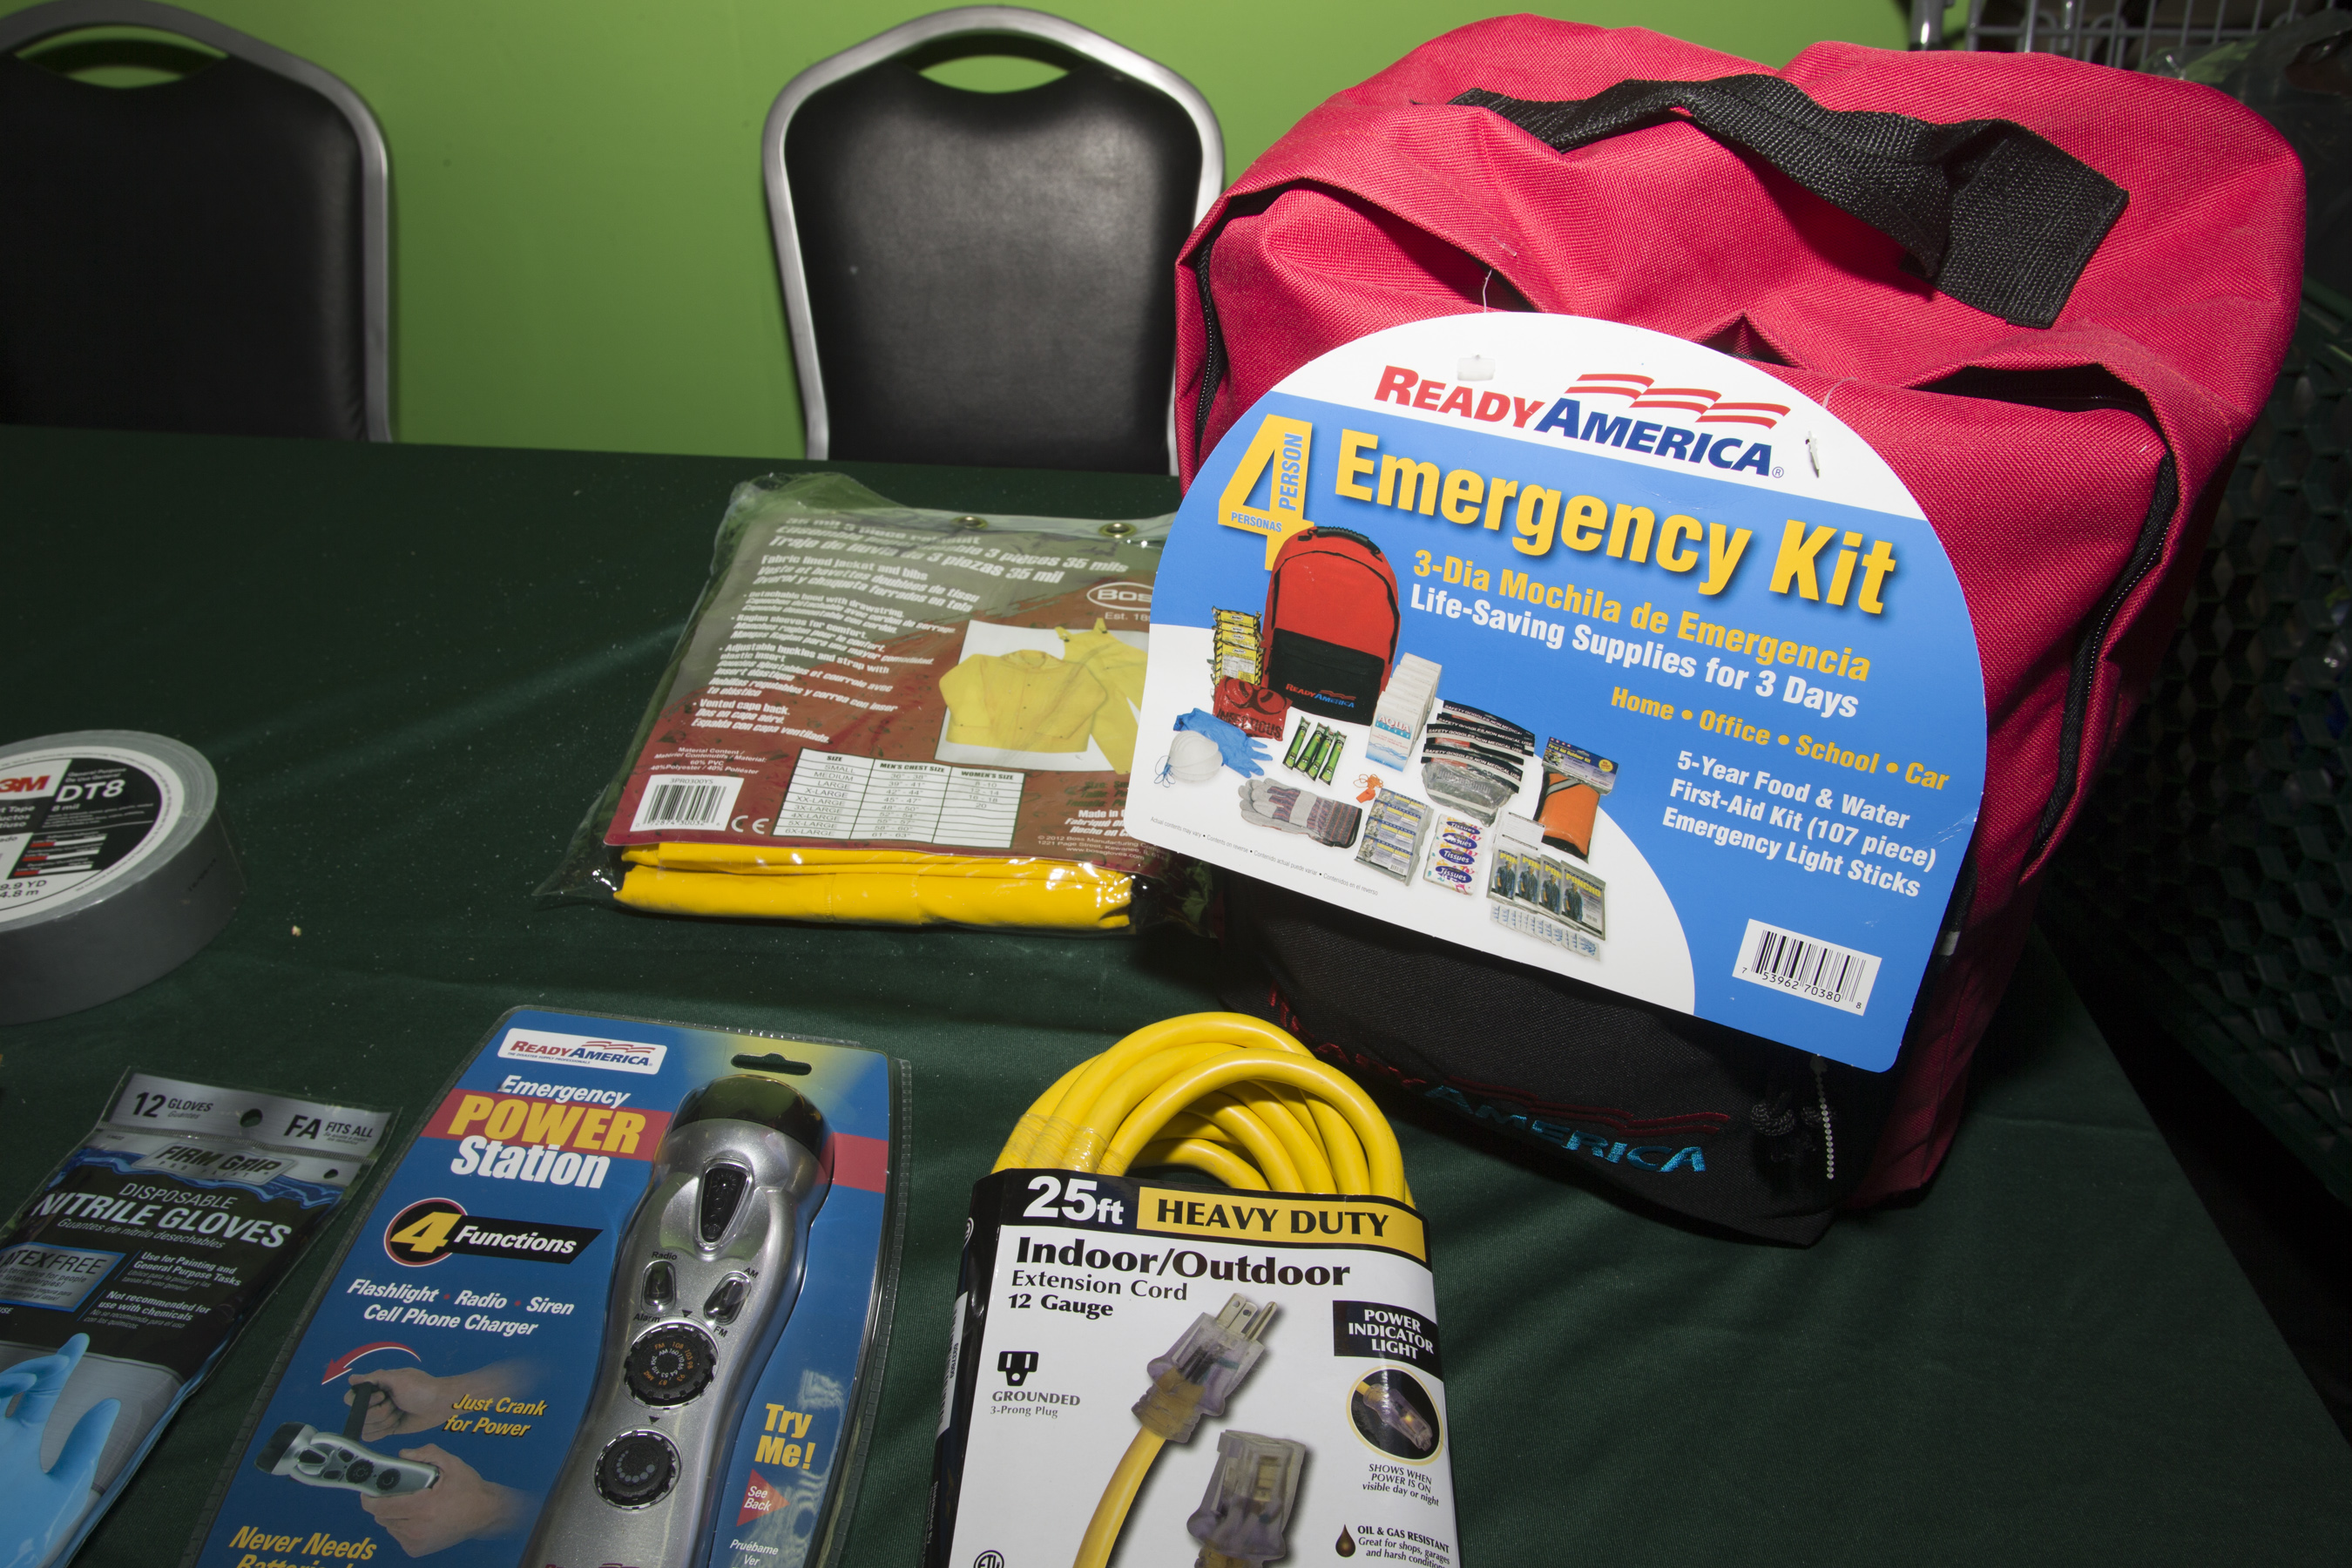 Suministros del kit de emergencia